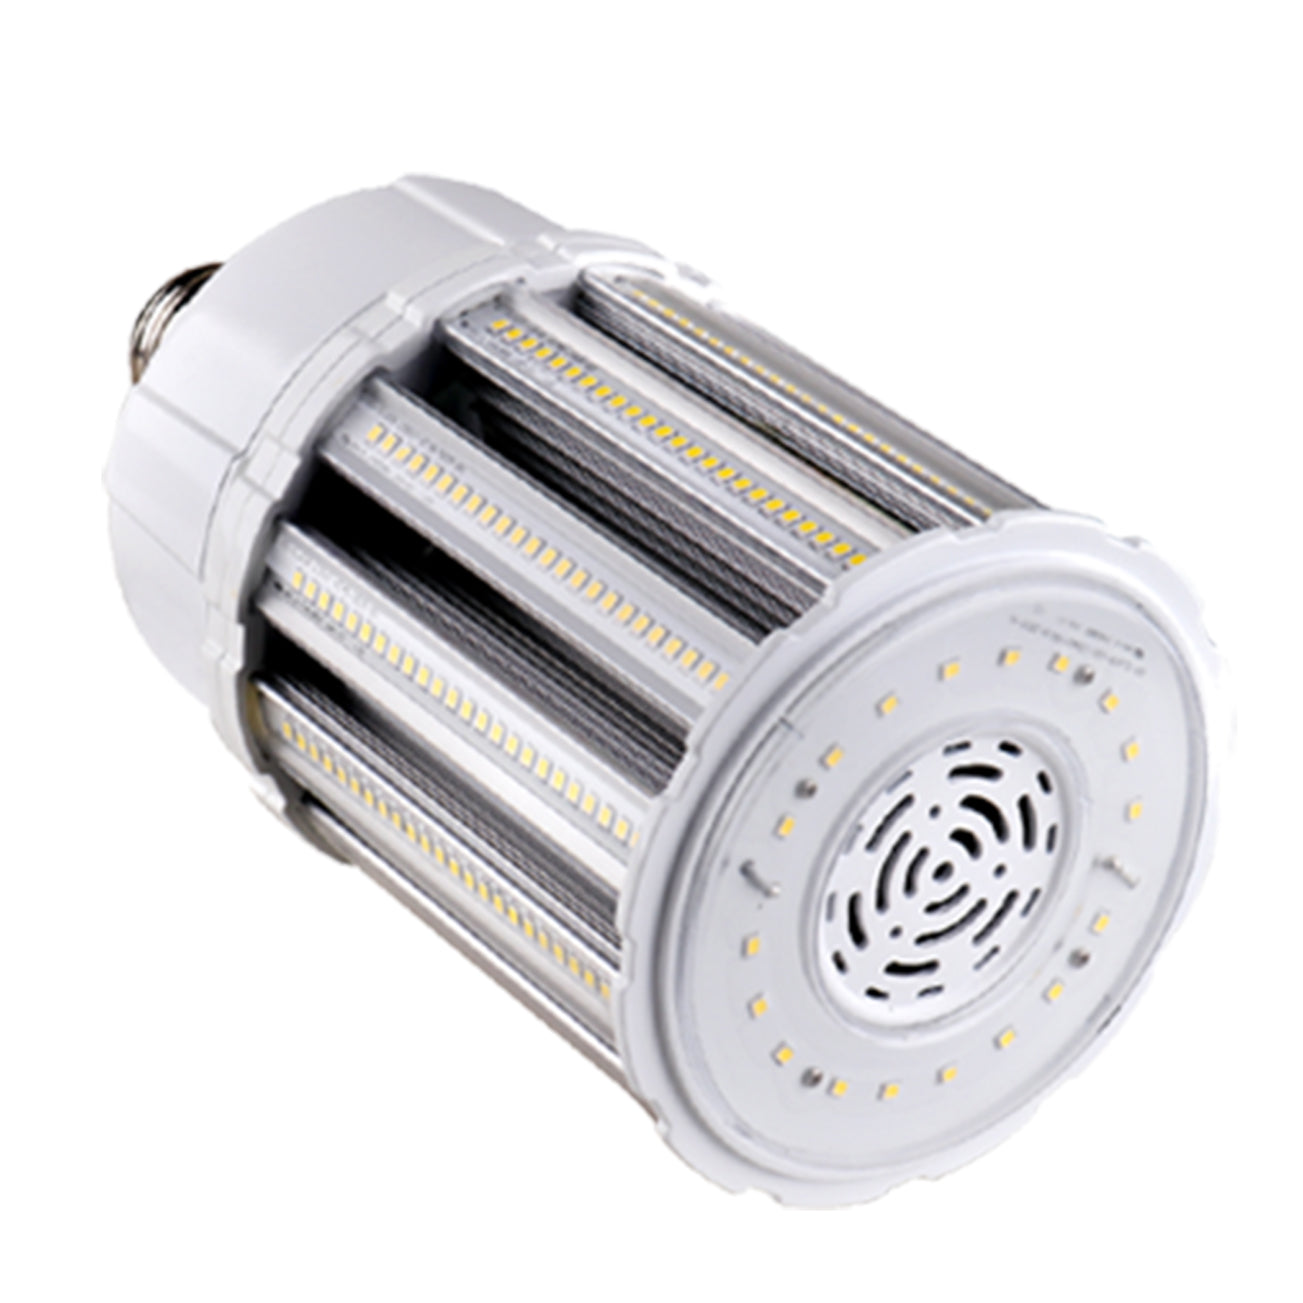 75-Watt LED 9,375 Lumens Corn Bulb - EX39/E26 Adapter Included